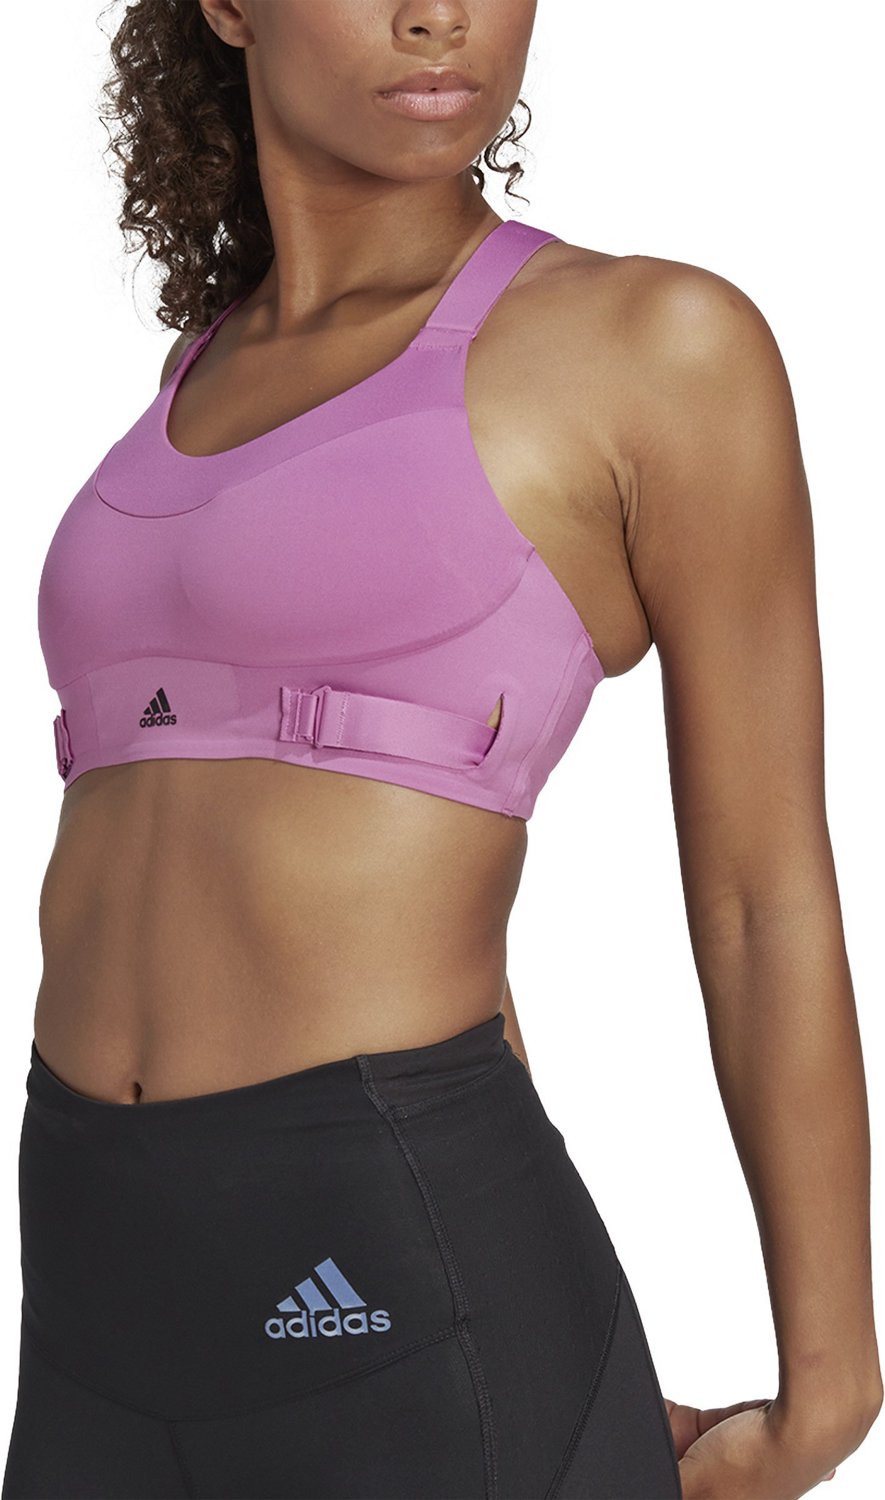 Adidas Nearme — Adidas Products Nearby, Sports Bras For Woman, by Adidas  Nearme